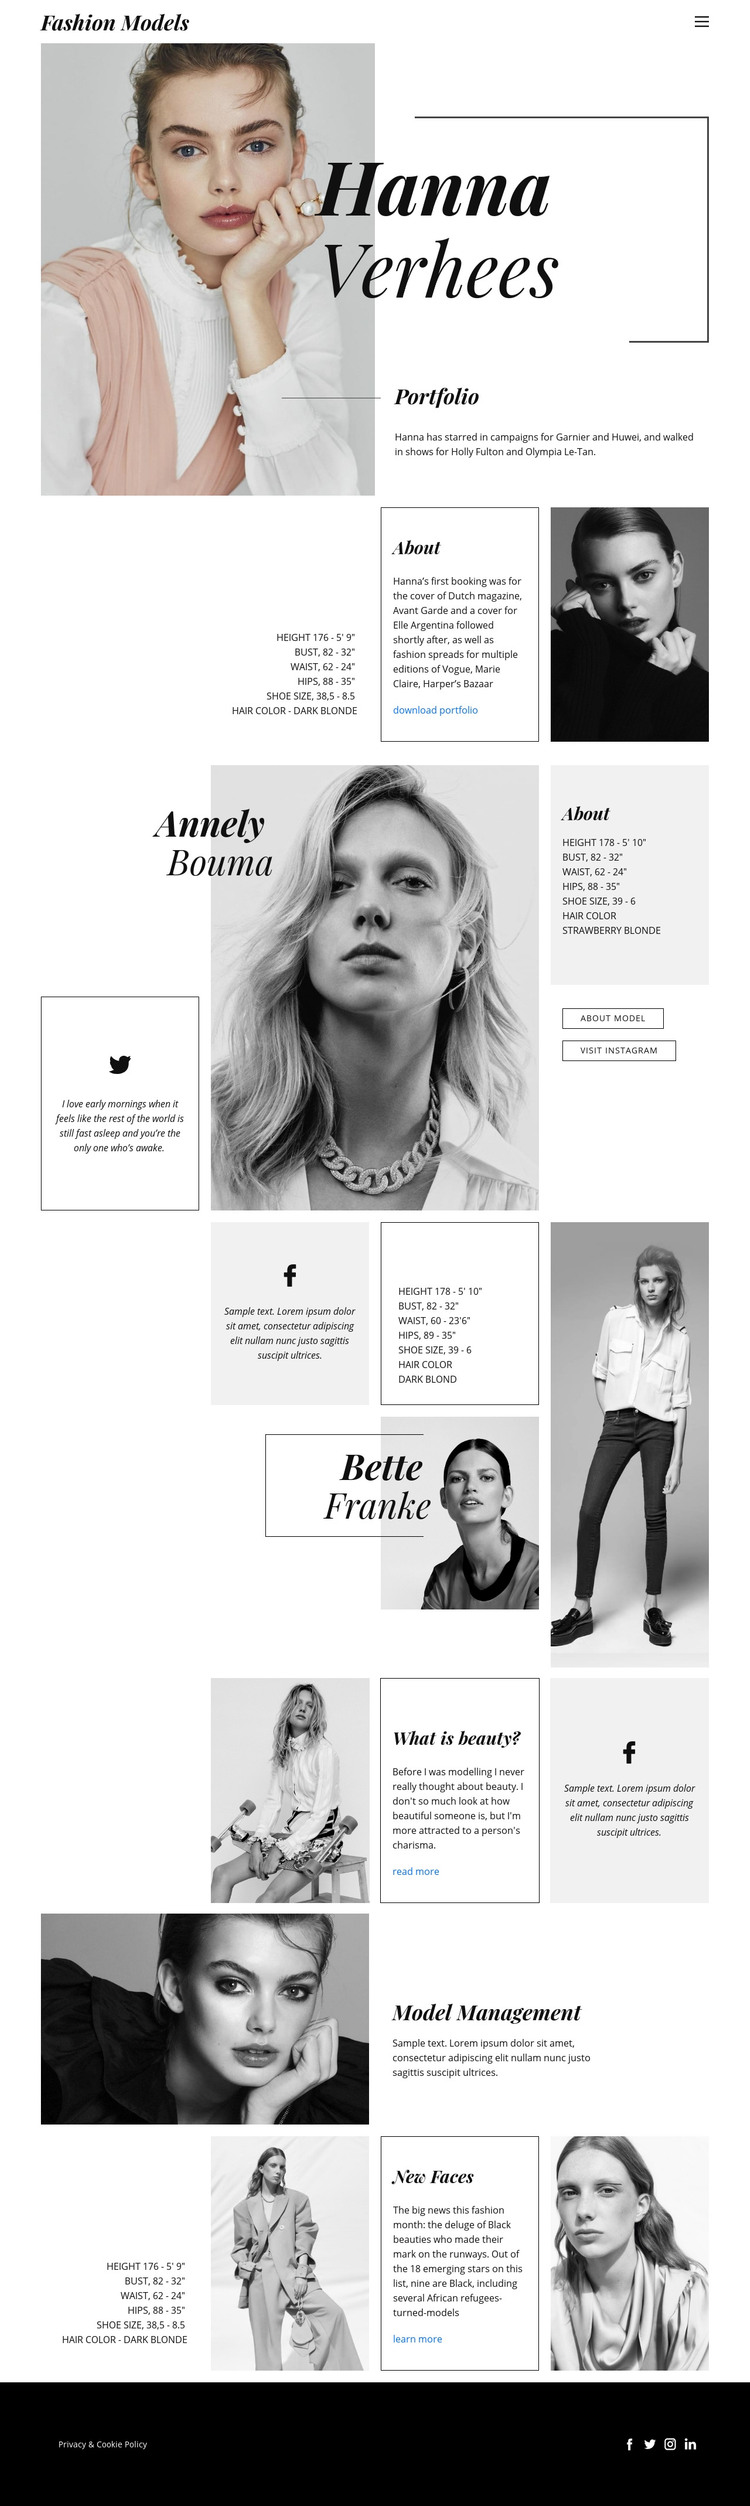 Hanna Verhees Blog Homepage Design